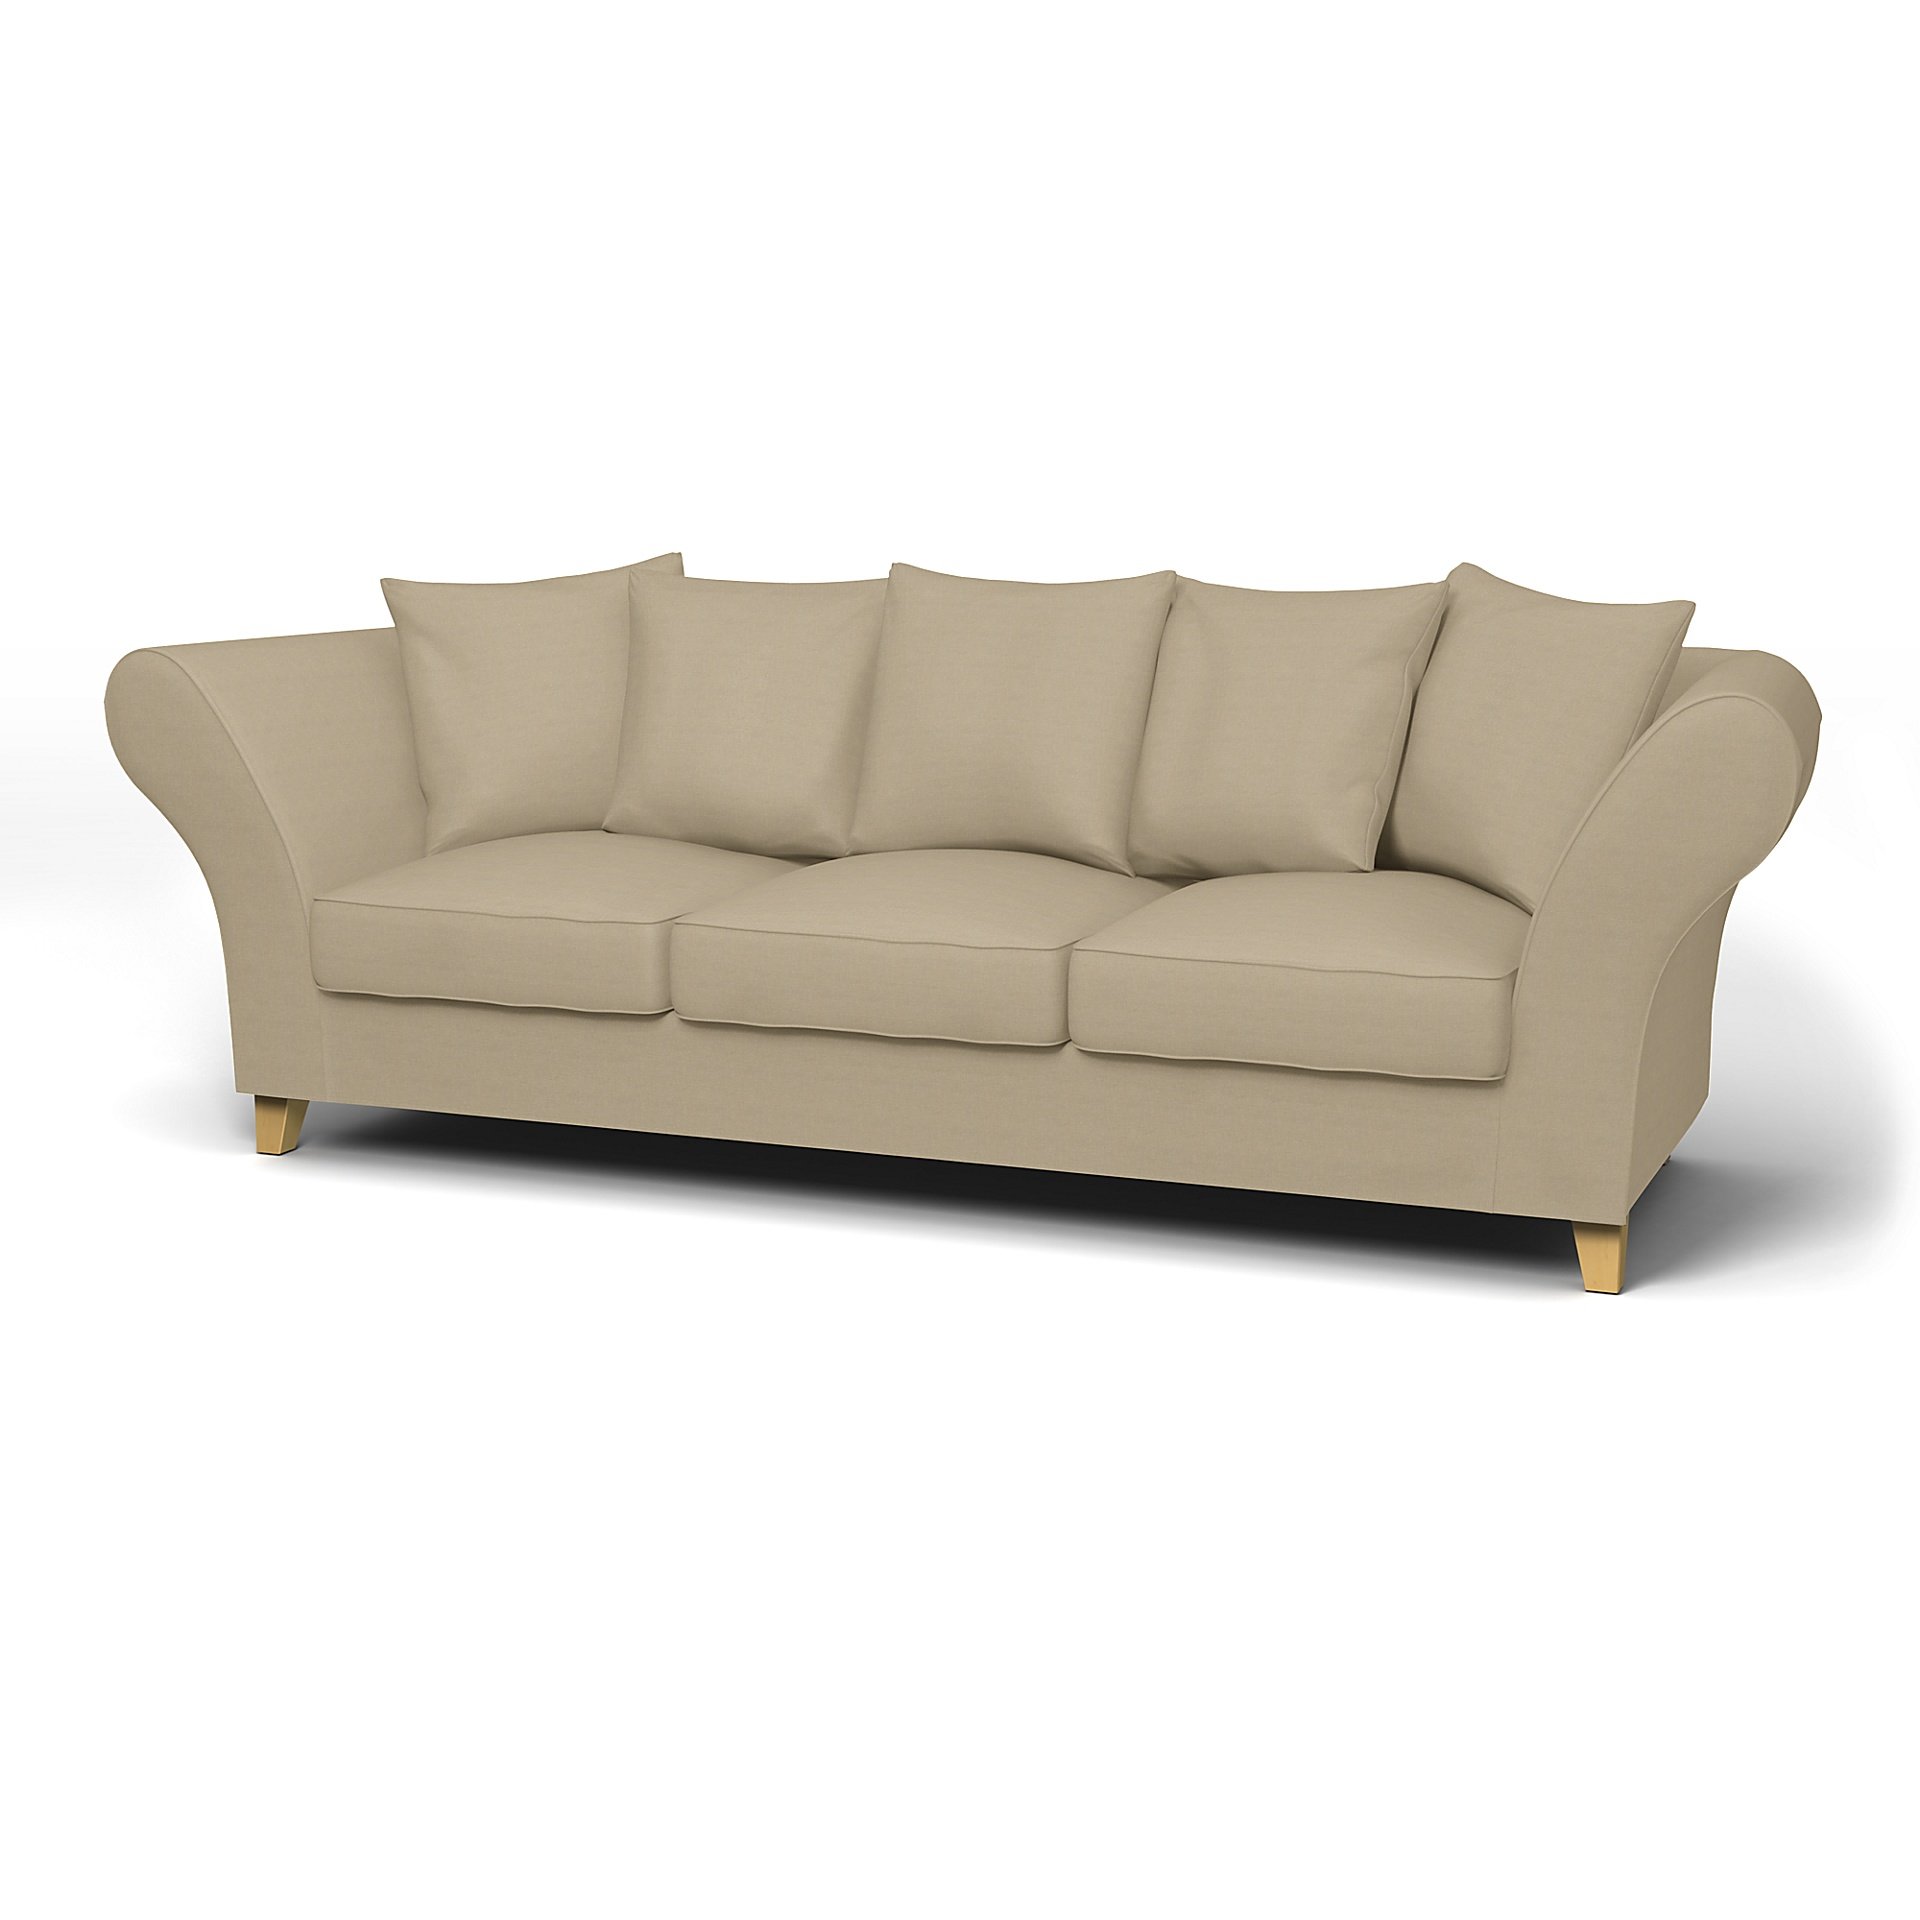 IKEA - Backa 3.5 Seater Sofa Cover, Tan, Linen - Bemz